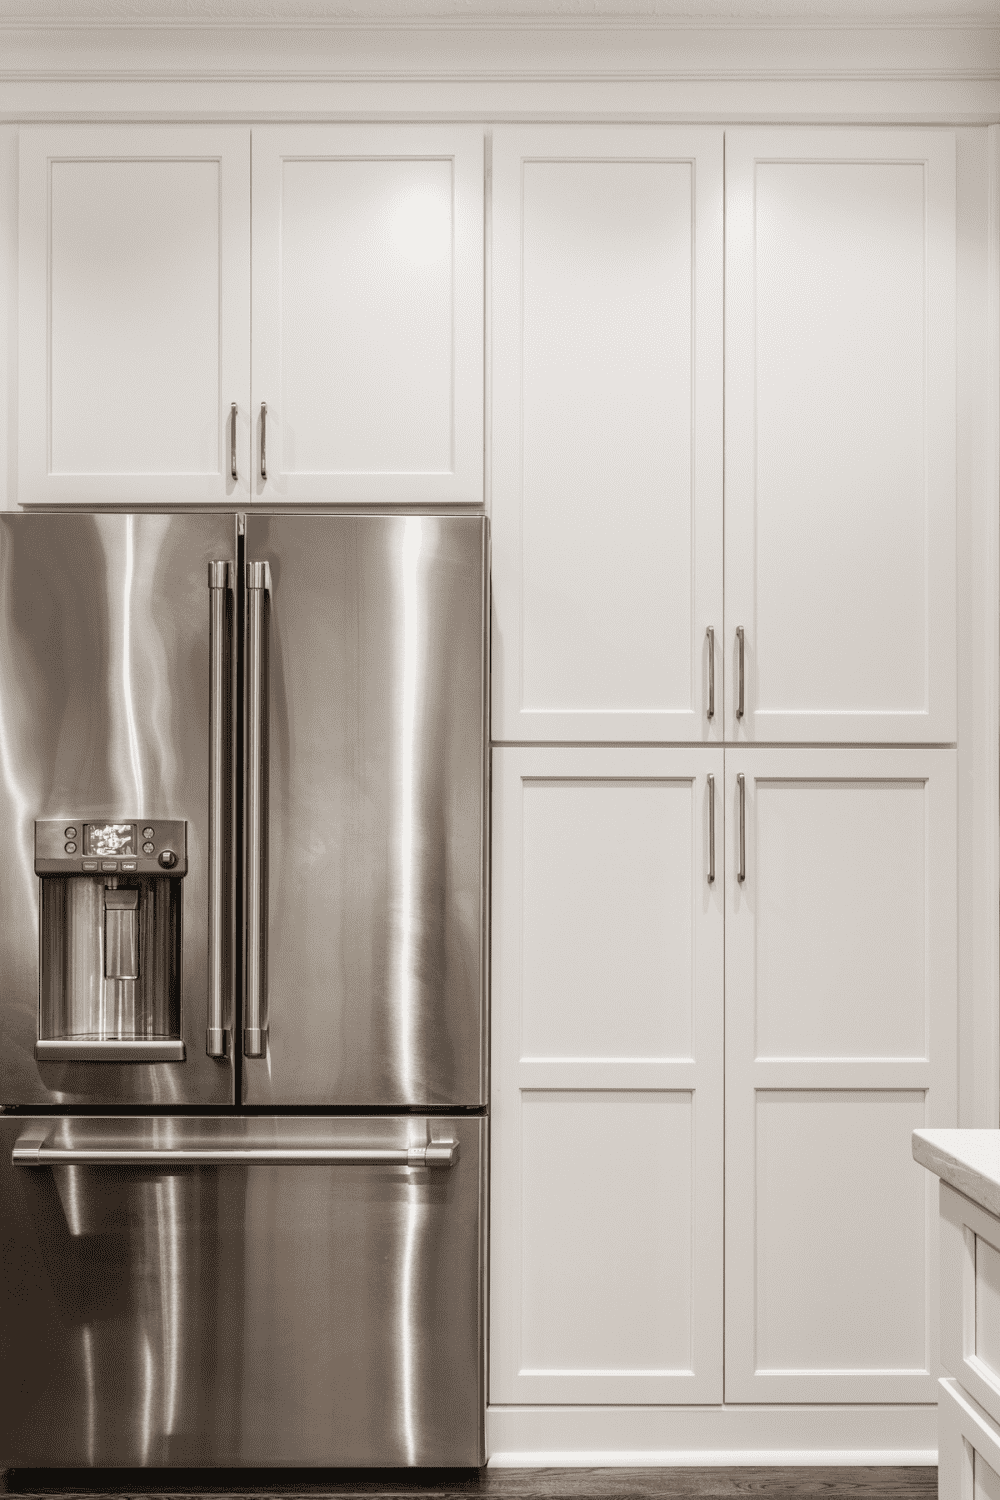 Nicholas Design Build | A stainless steel refrigerator in a white kitchen.